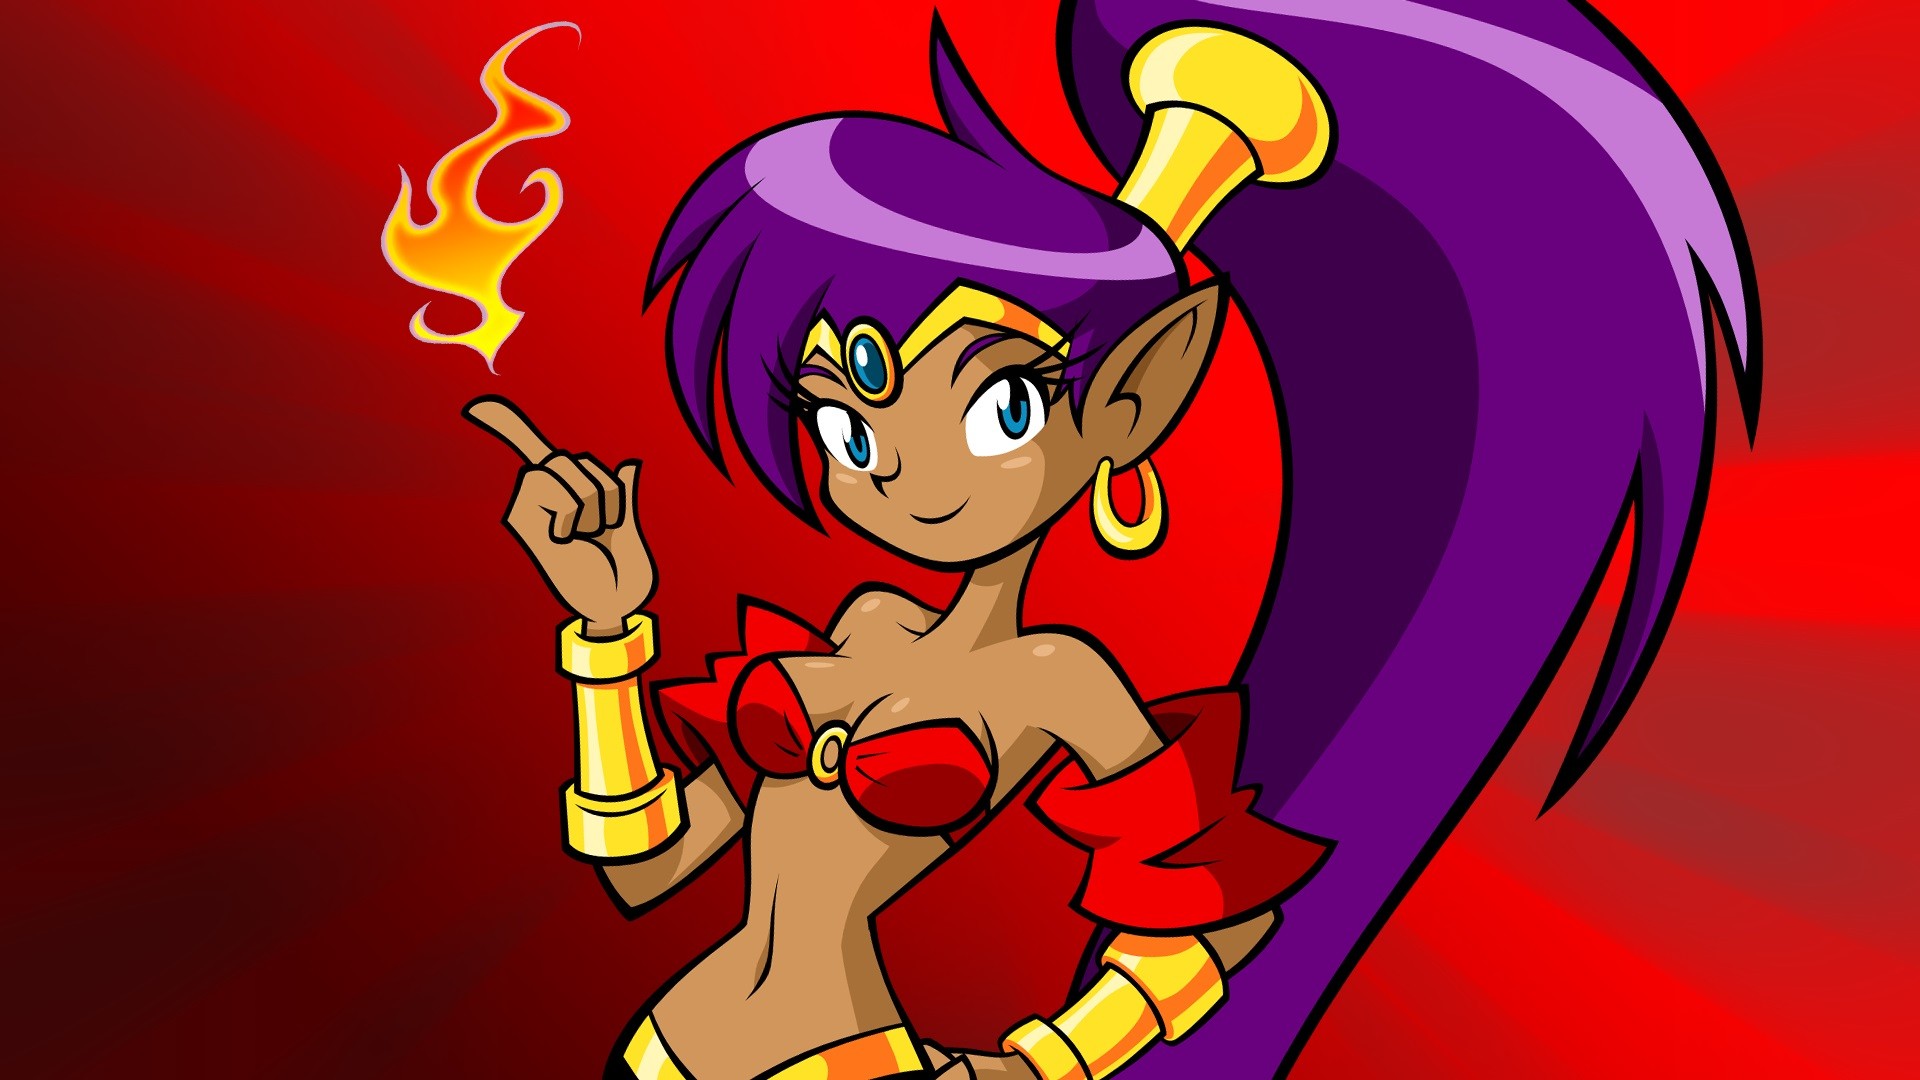 Anime 1920x1080 Shantae: Risky's Revenge genie girl Shantae fantasy girl boobs belly purple hair aqua eyes red background